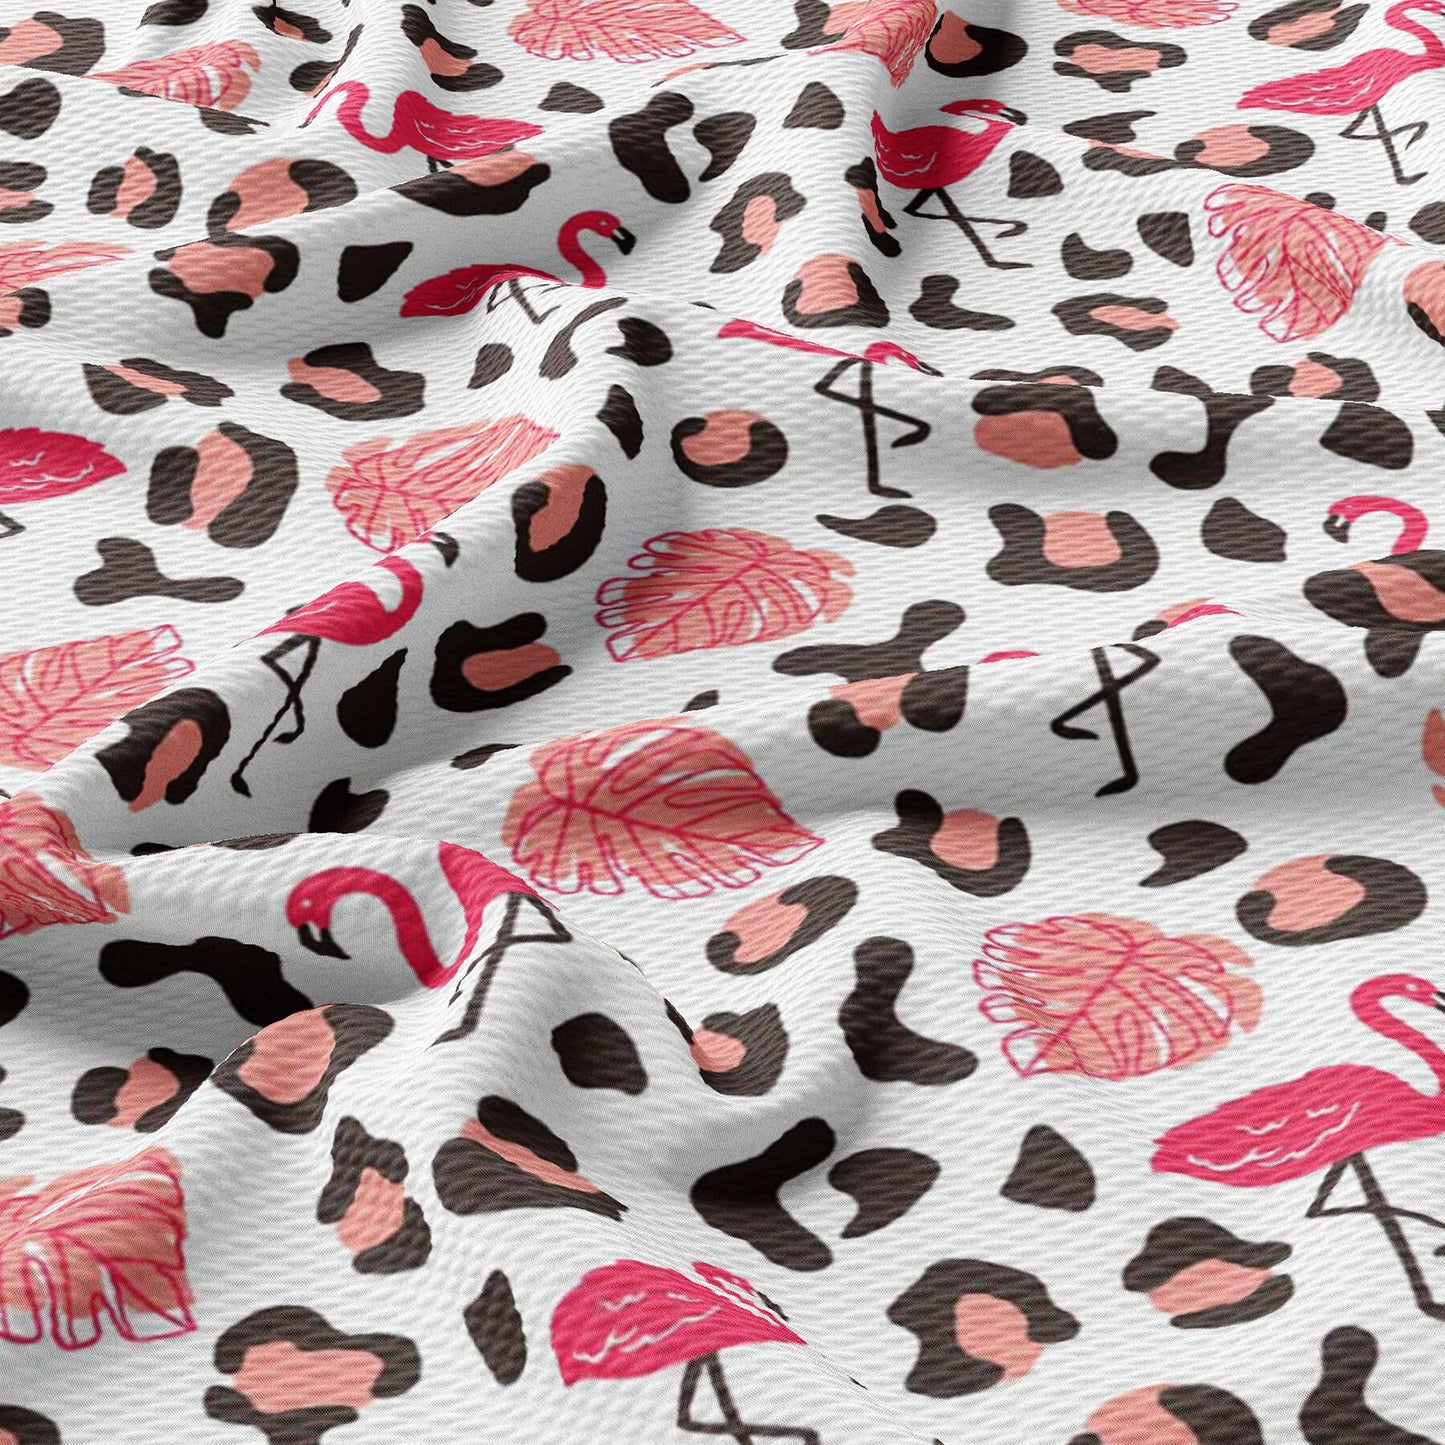 Flamingo Cheetah  Bullet Textured Fabric by the yard AA1632